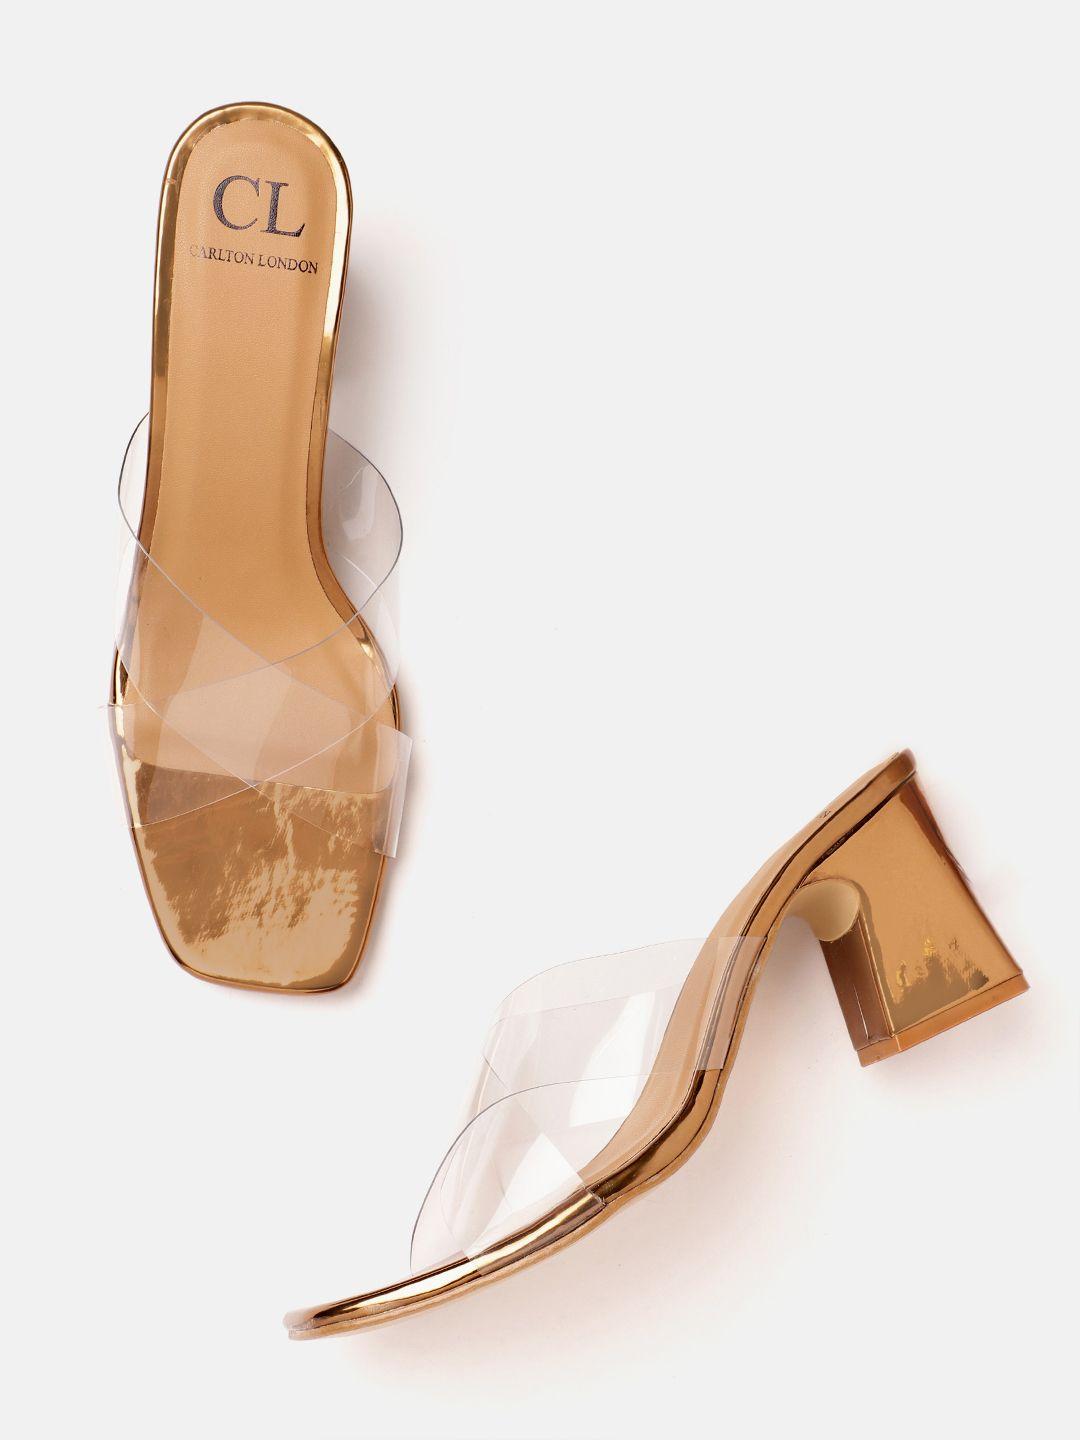 carlton-london-women-block-heels